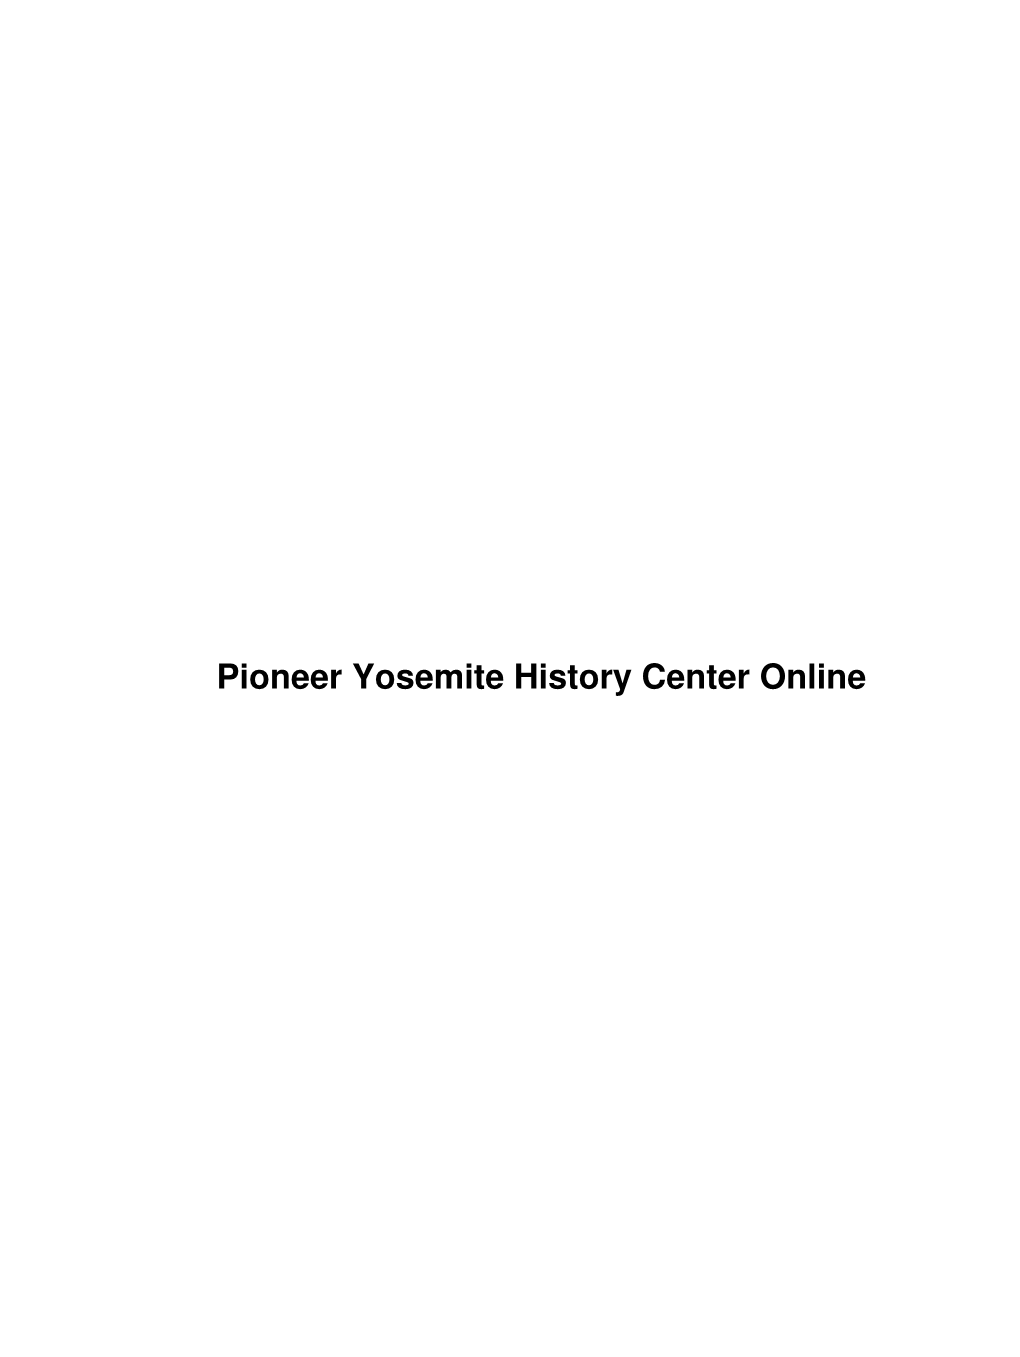 Pioneer Yosemite History Center Online Pioneer Yosemite History Center Online Table of Contents Pioneer Yosemite History Center Online